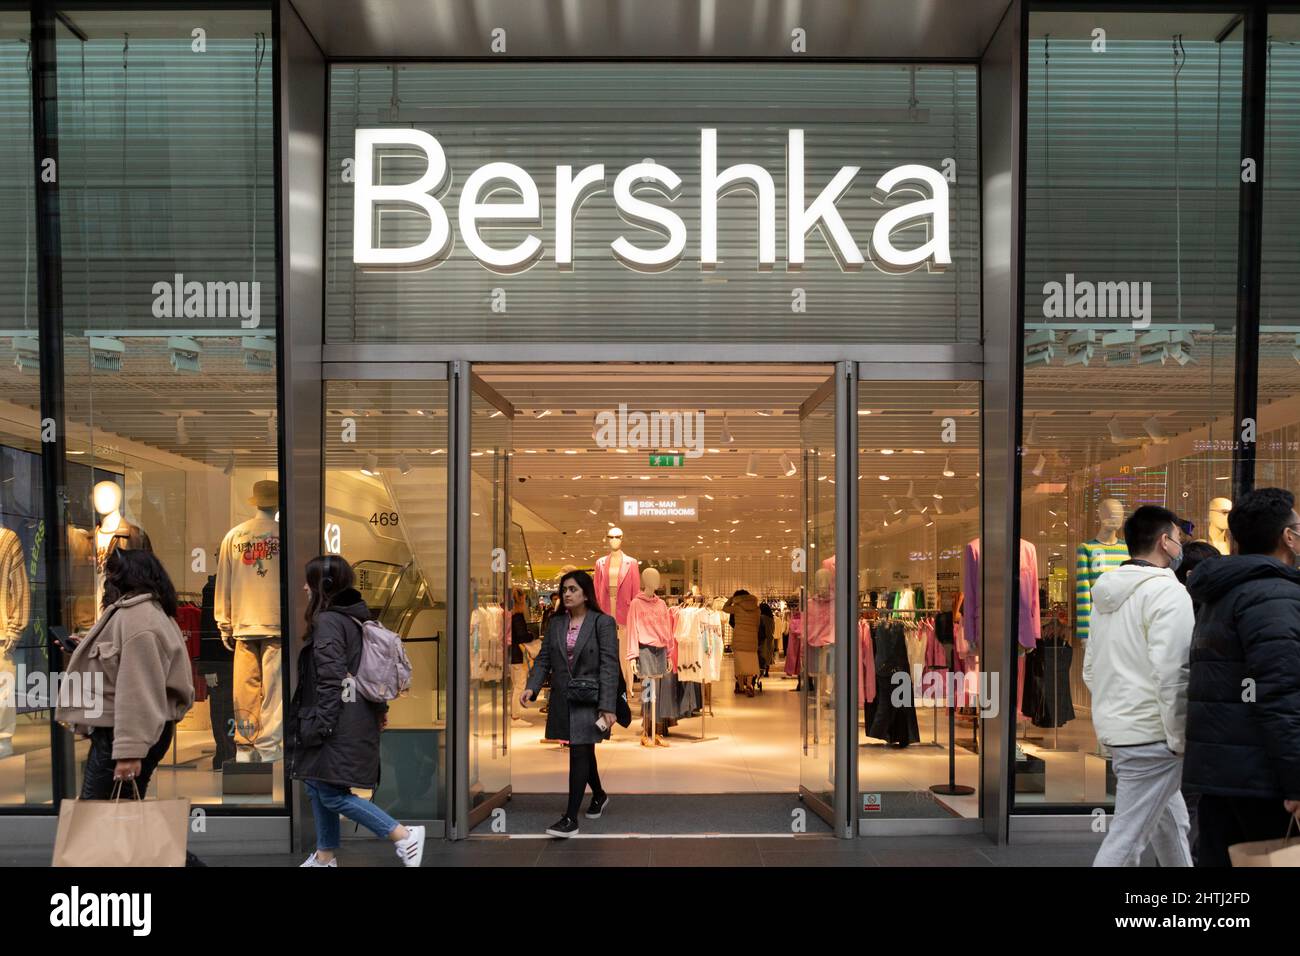 Bershka store on Oxford Street, West End London Stock Photo - Alamy